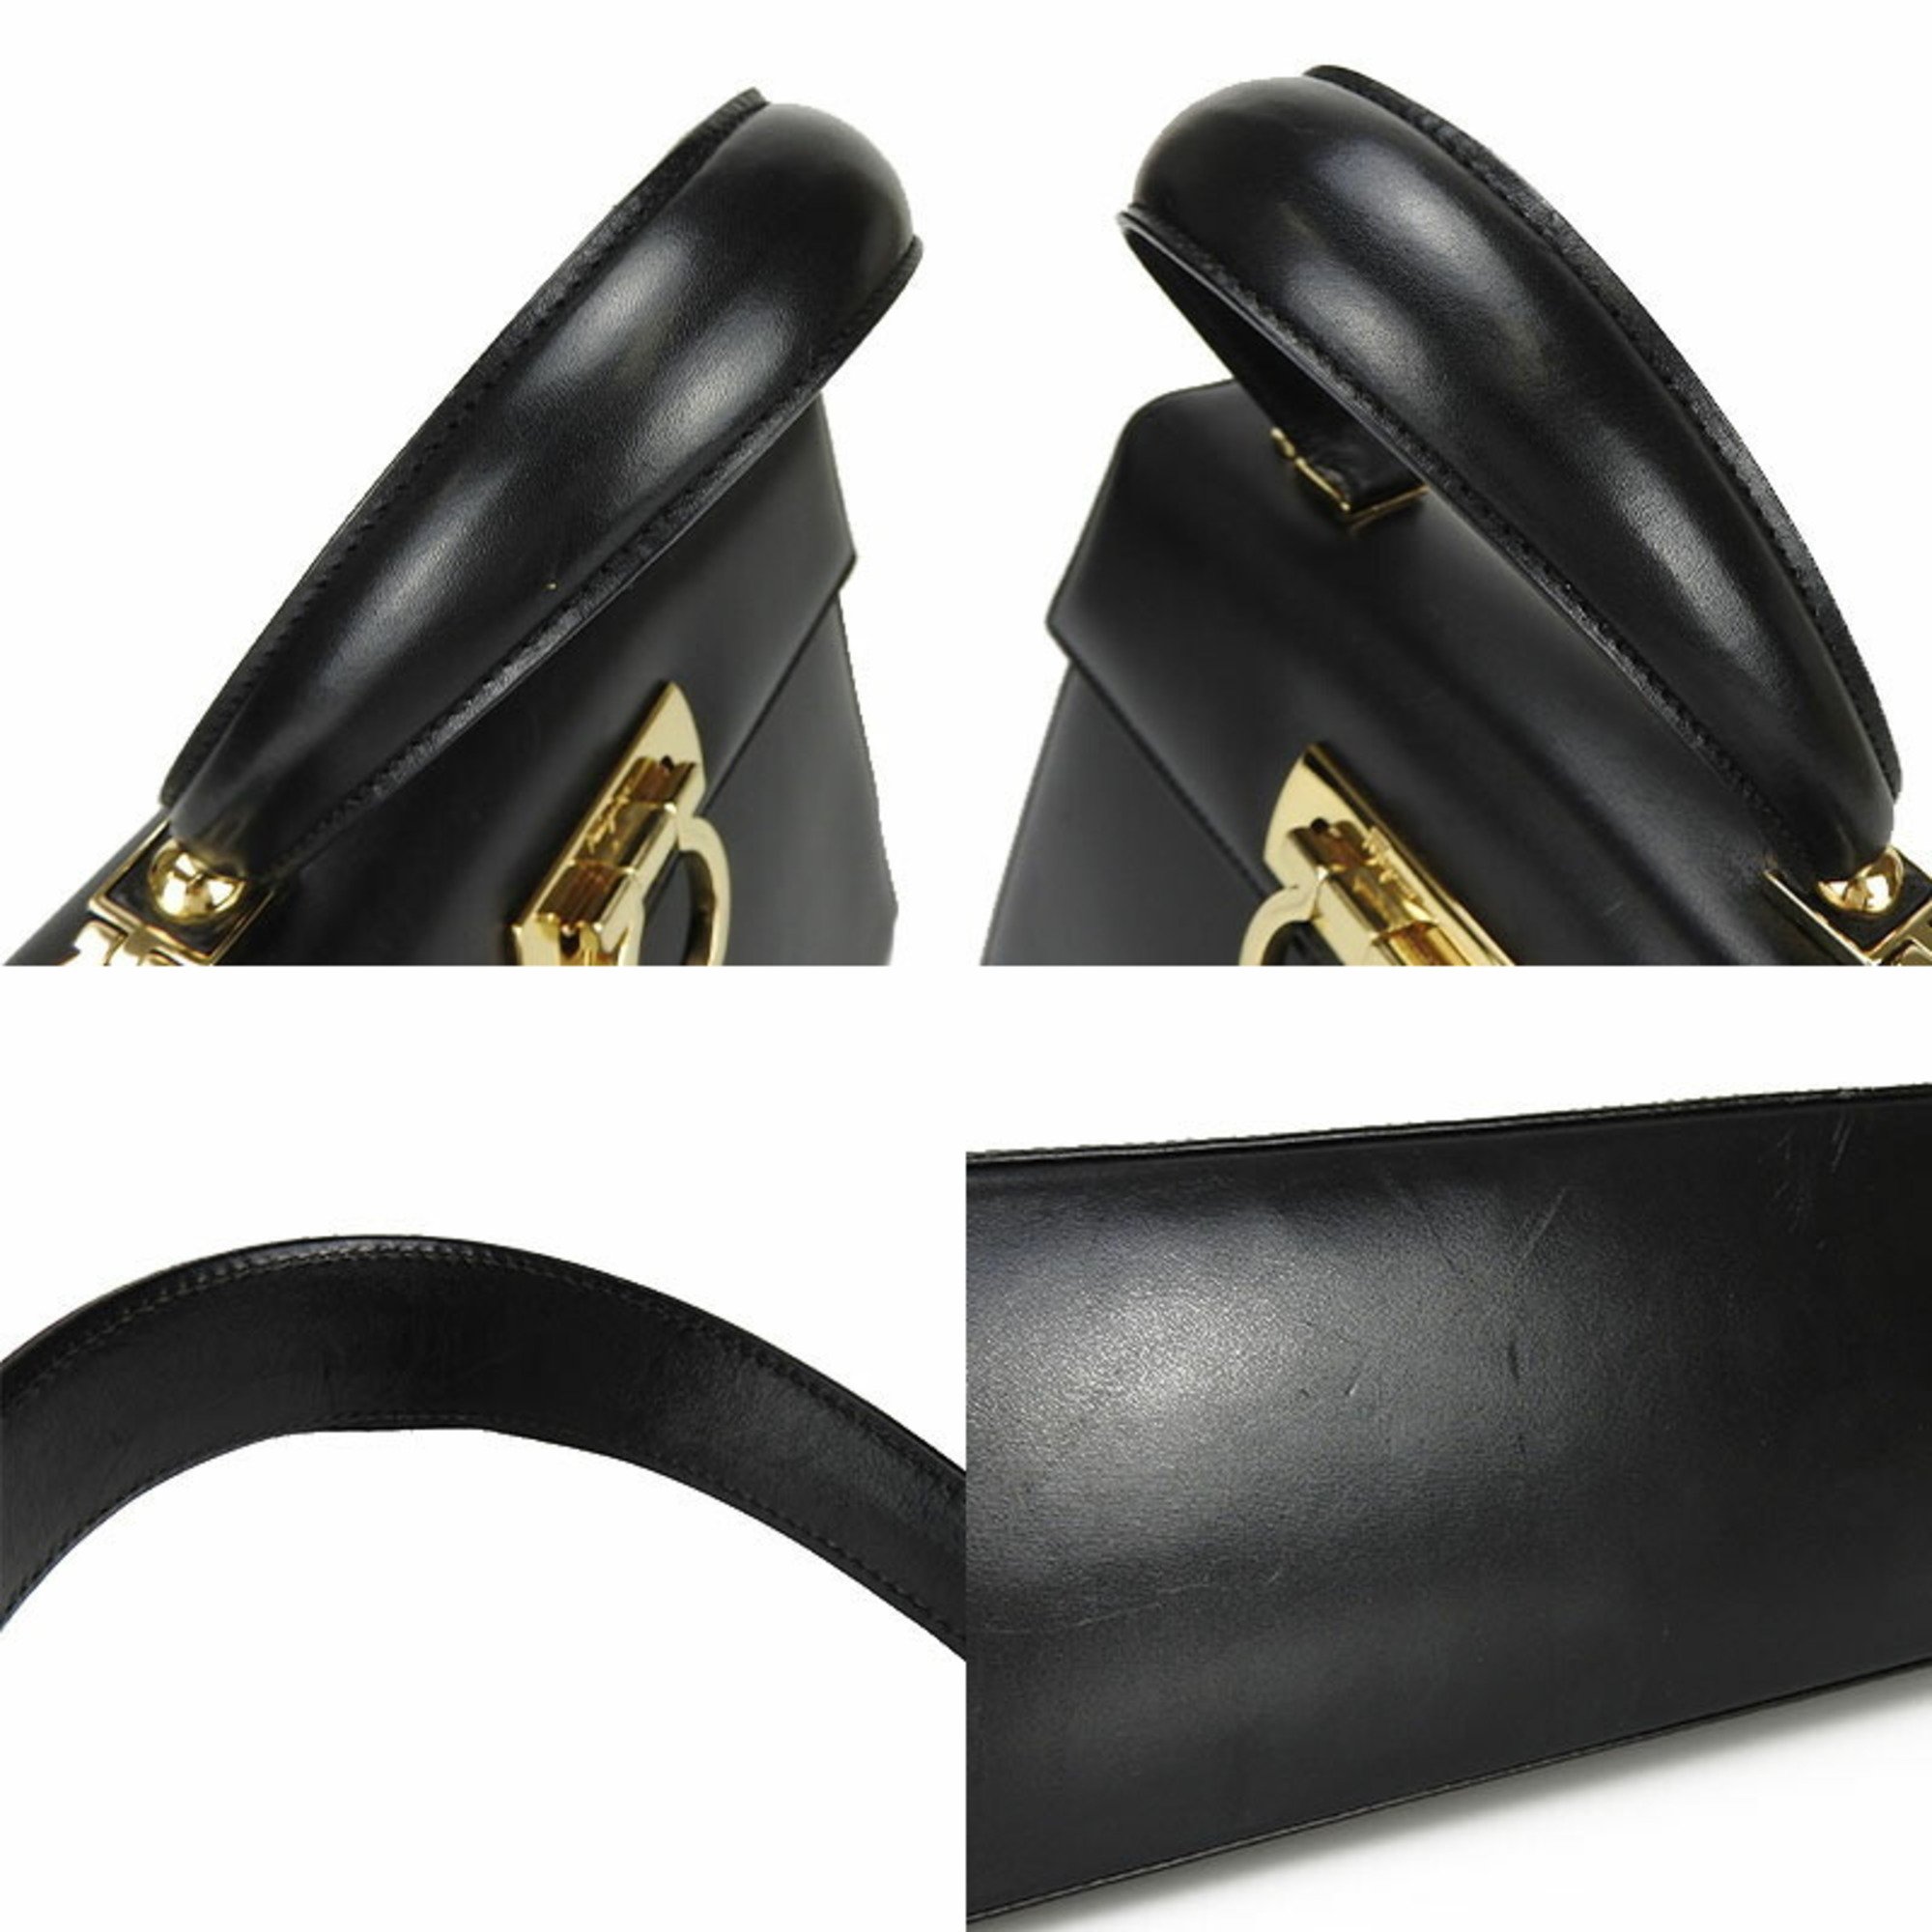 Salvatore Ferragamo AF-21-2181 Gancini 2way handbag leather calf shoulder black BLACK ladies Hand Bag